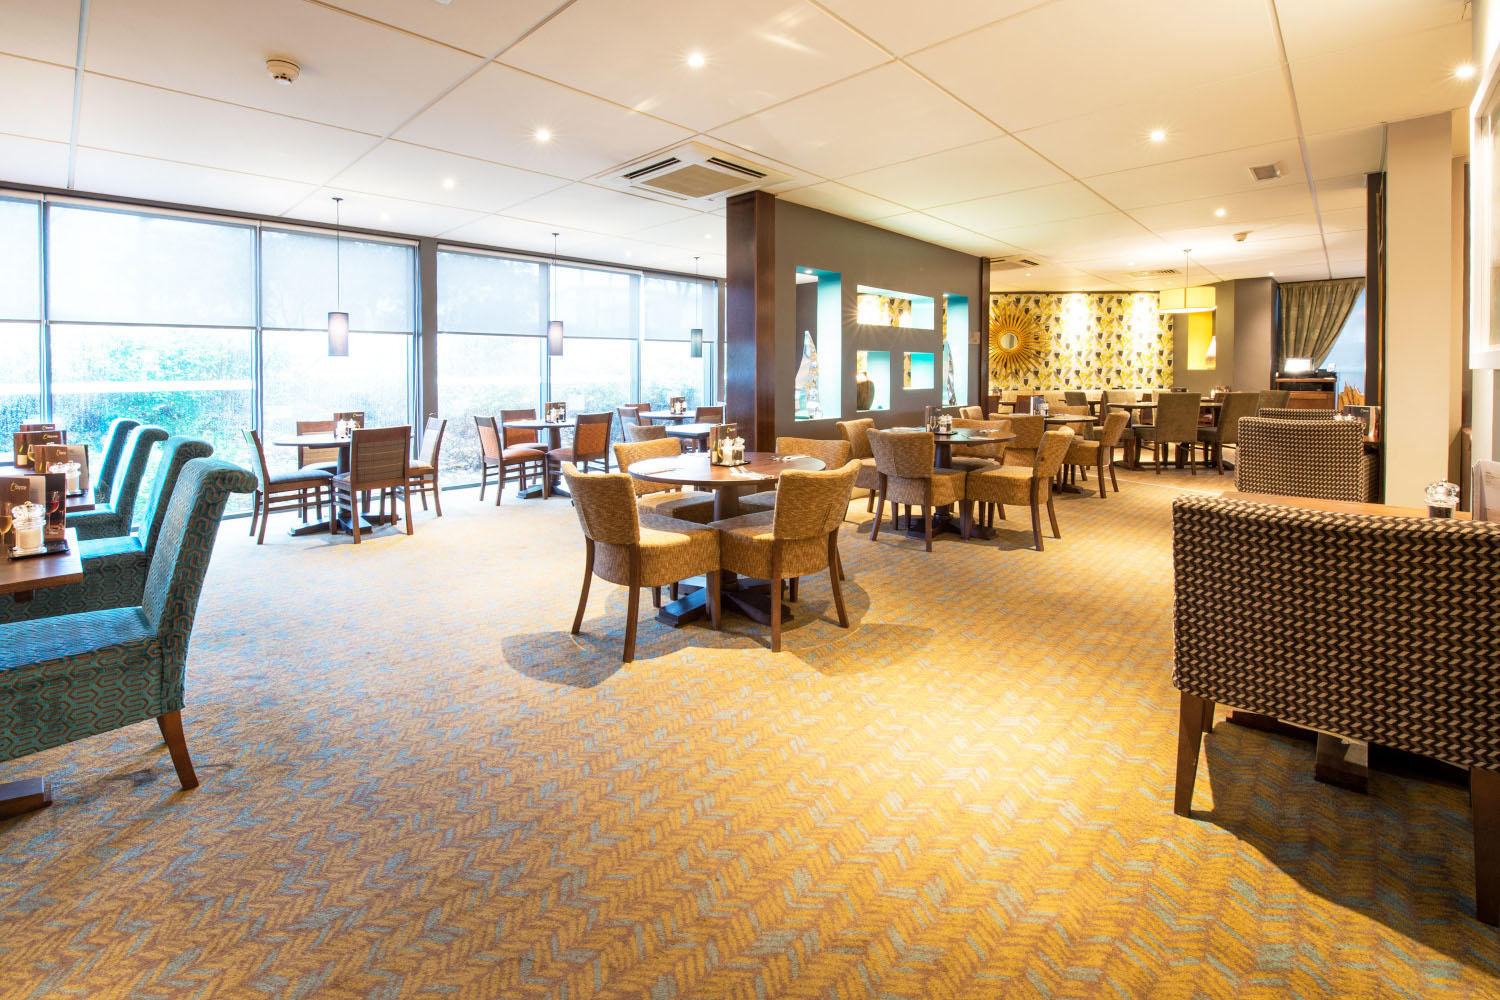 Thyme restaurant interior Premier Inn Portsmouth (Port Solent) hotel Portsmouth 03333 218334